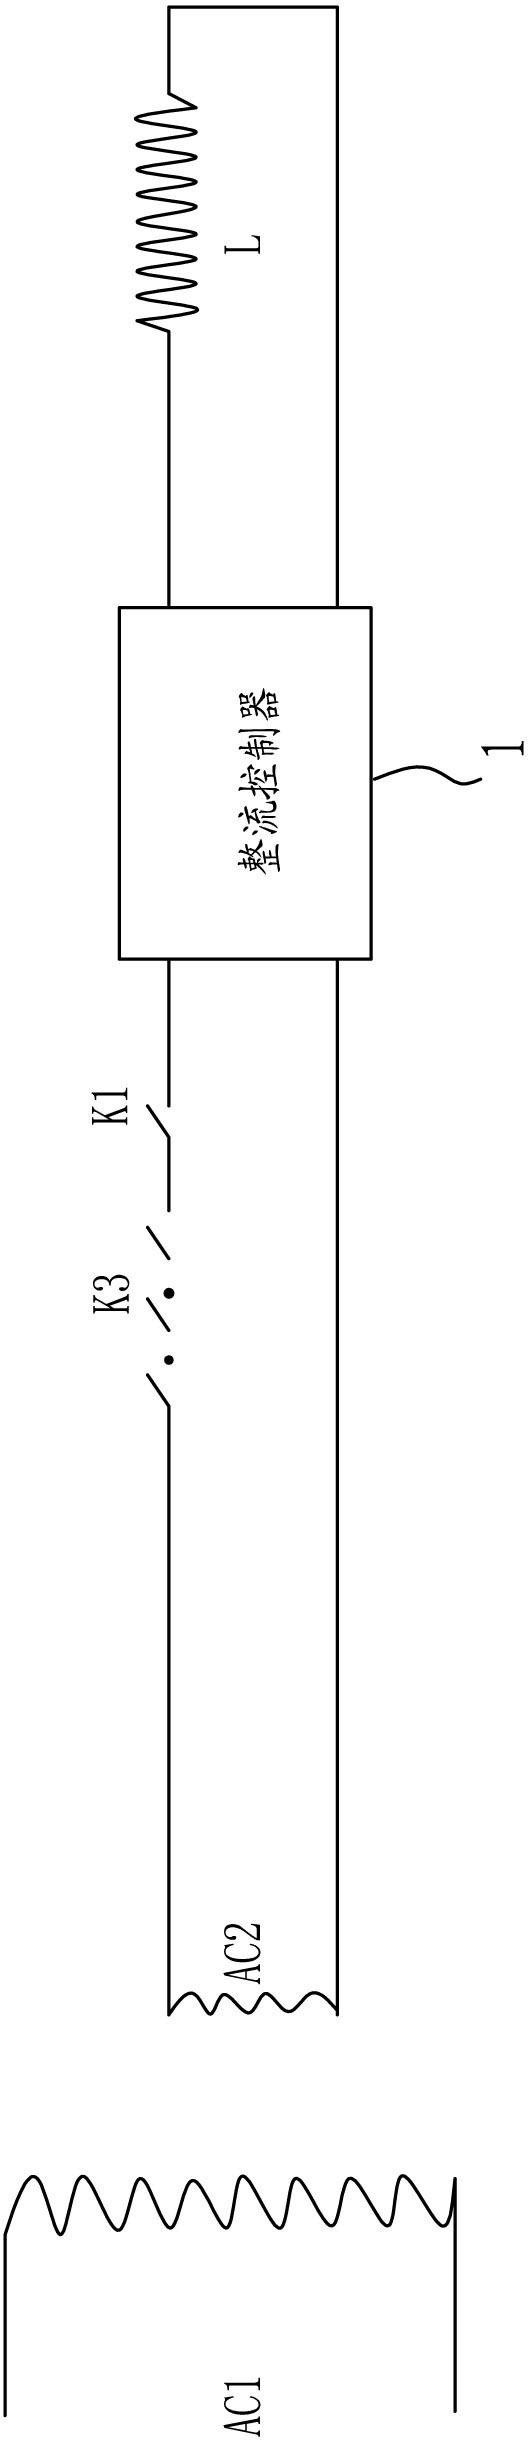 Control circuit of elevator brake